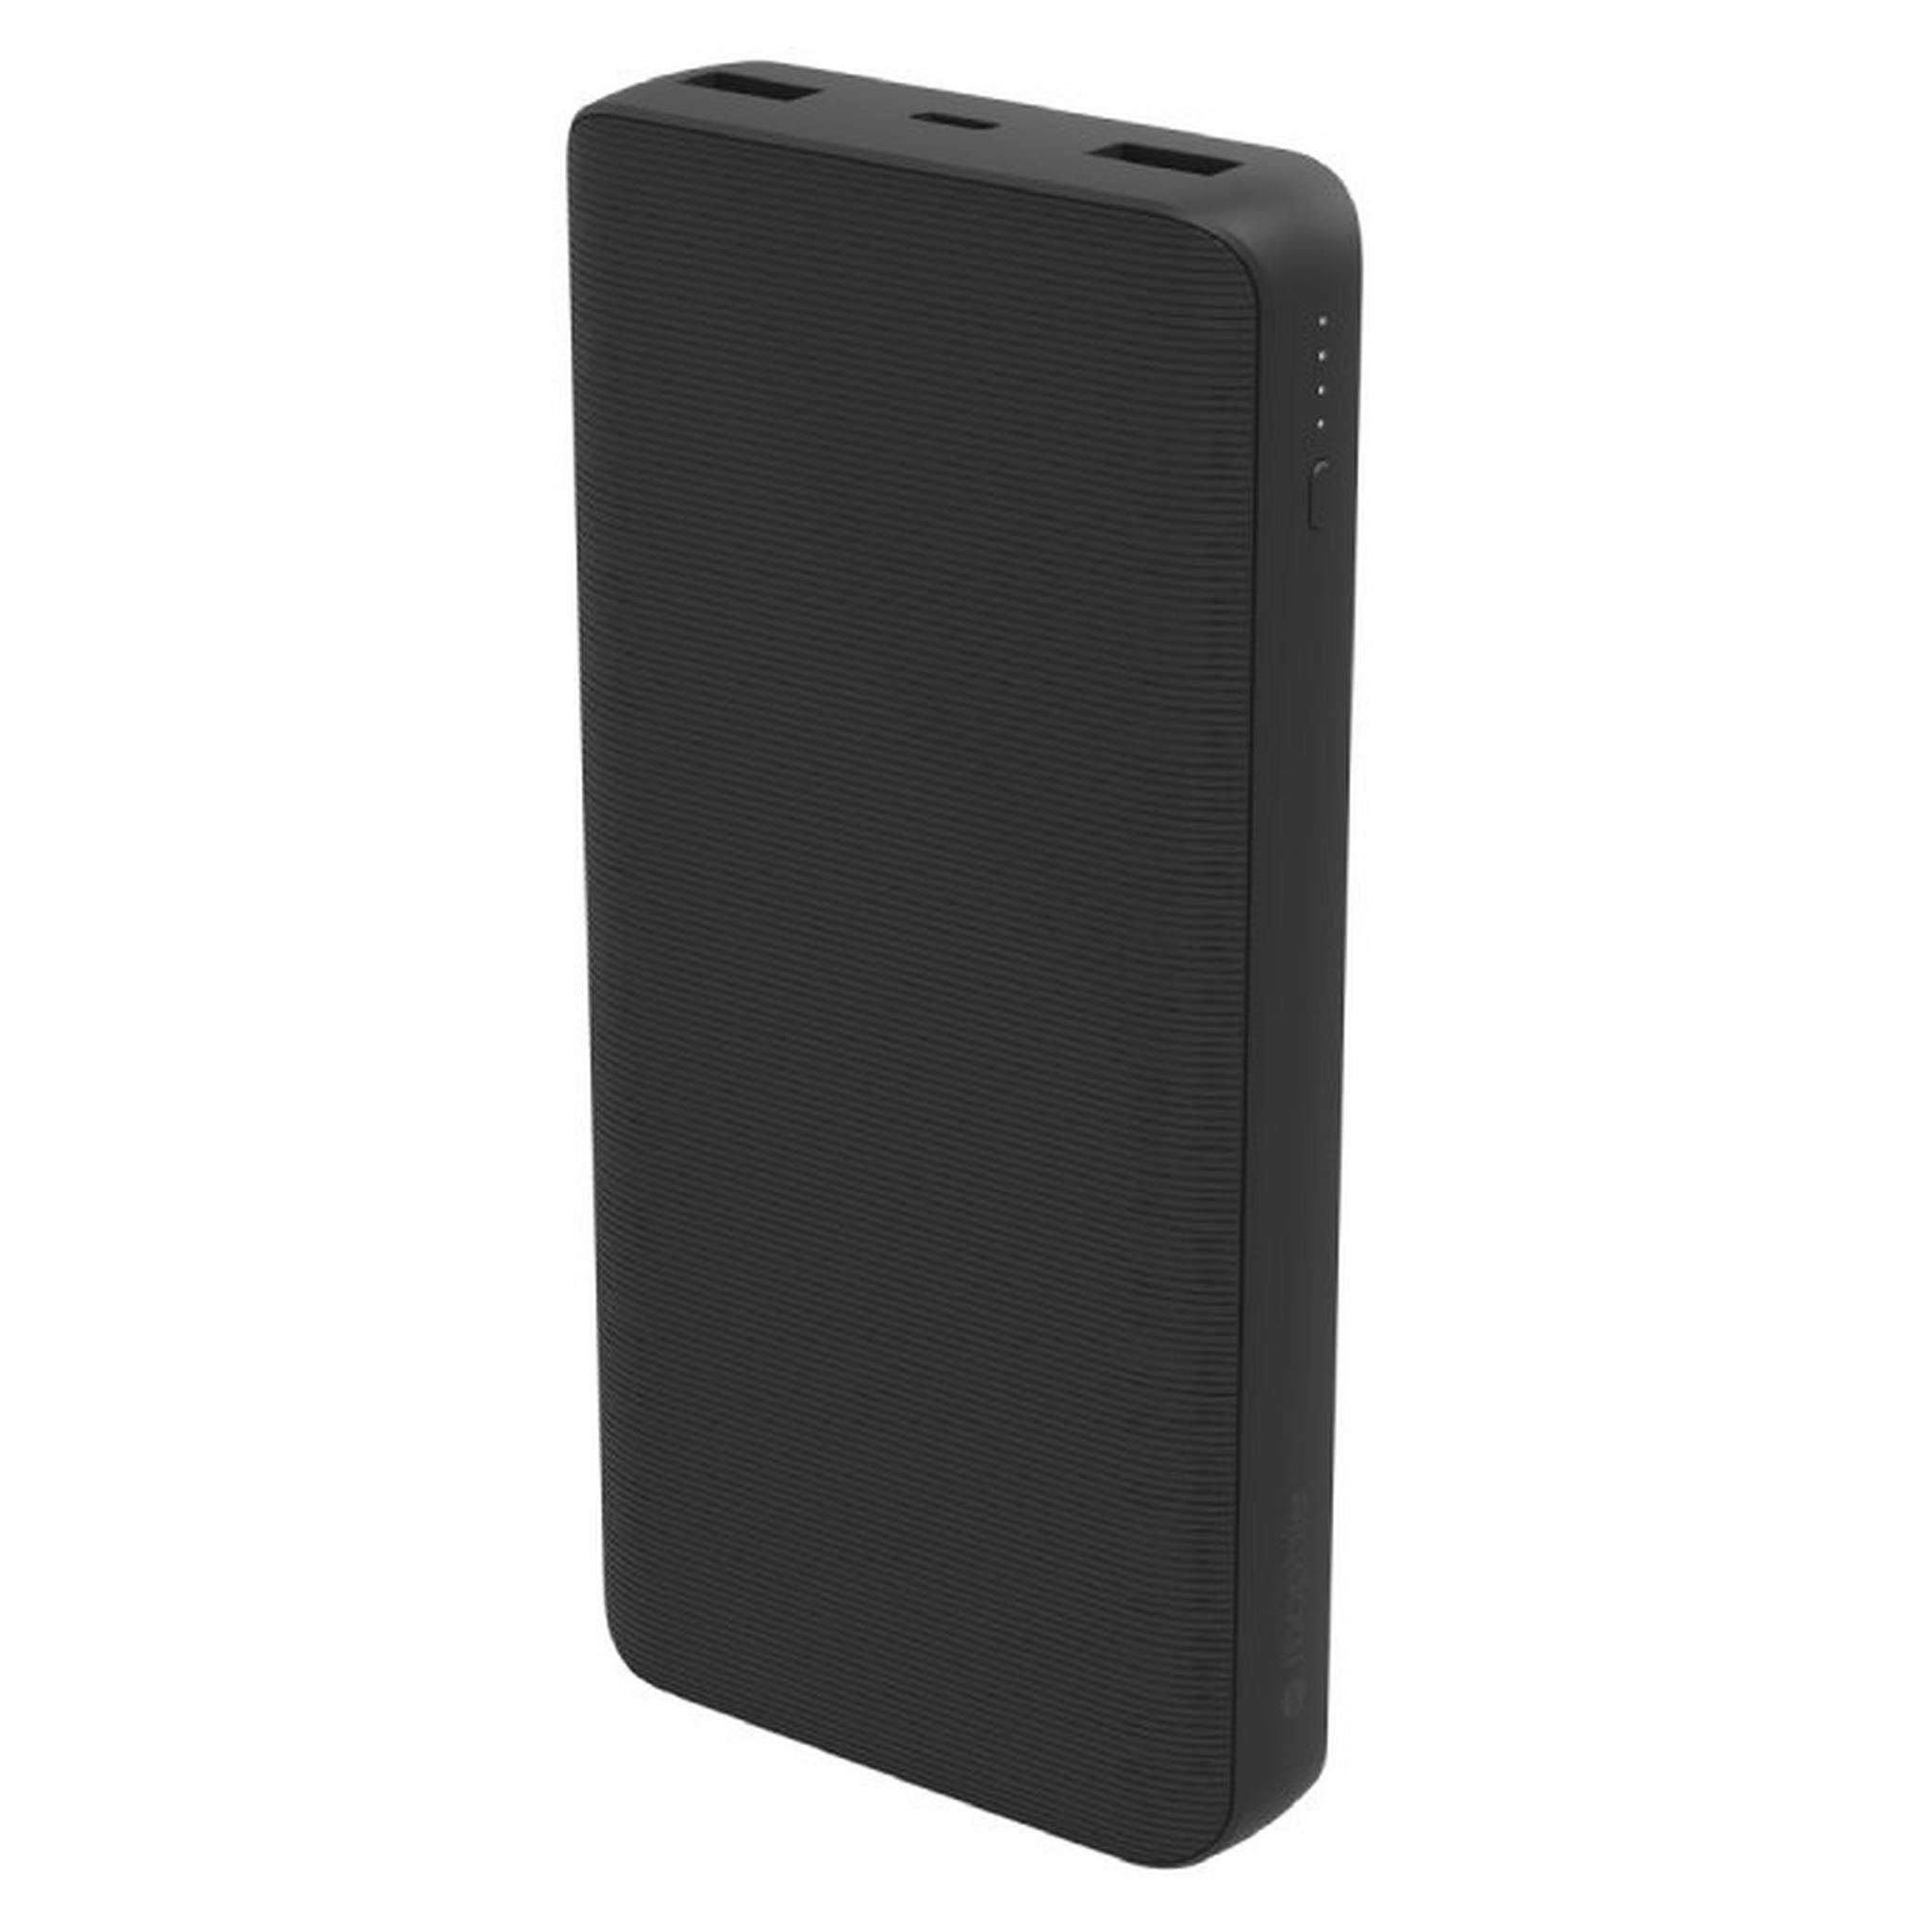 Mophie Essentials Powerstation Portable Battery, 20000 mAh, 401111853 – Black